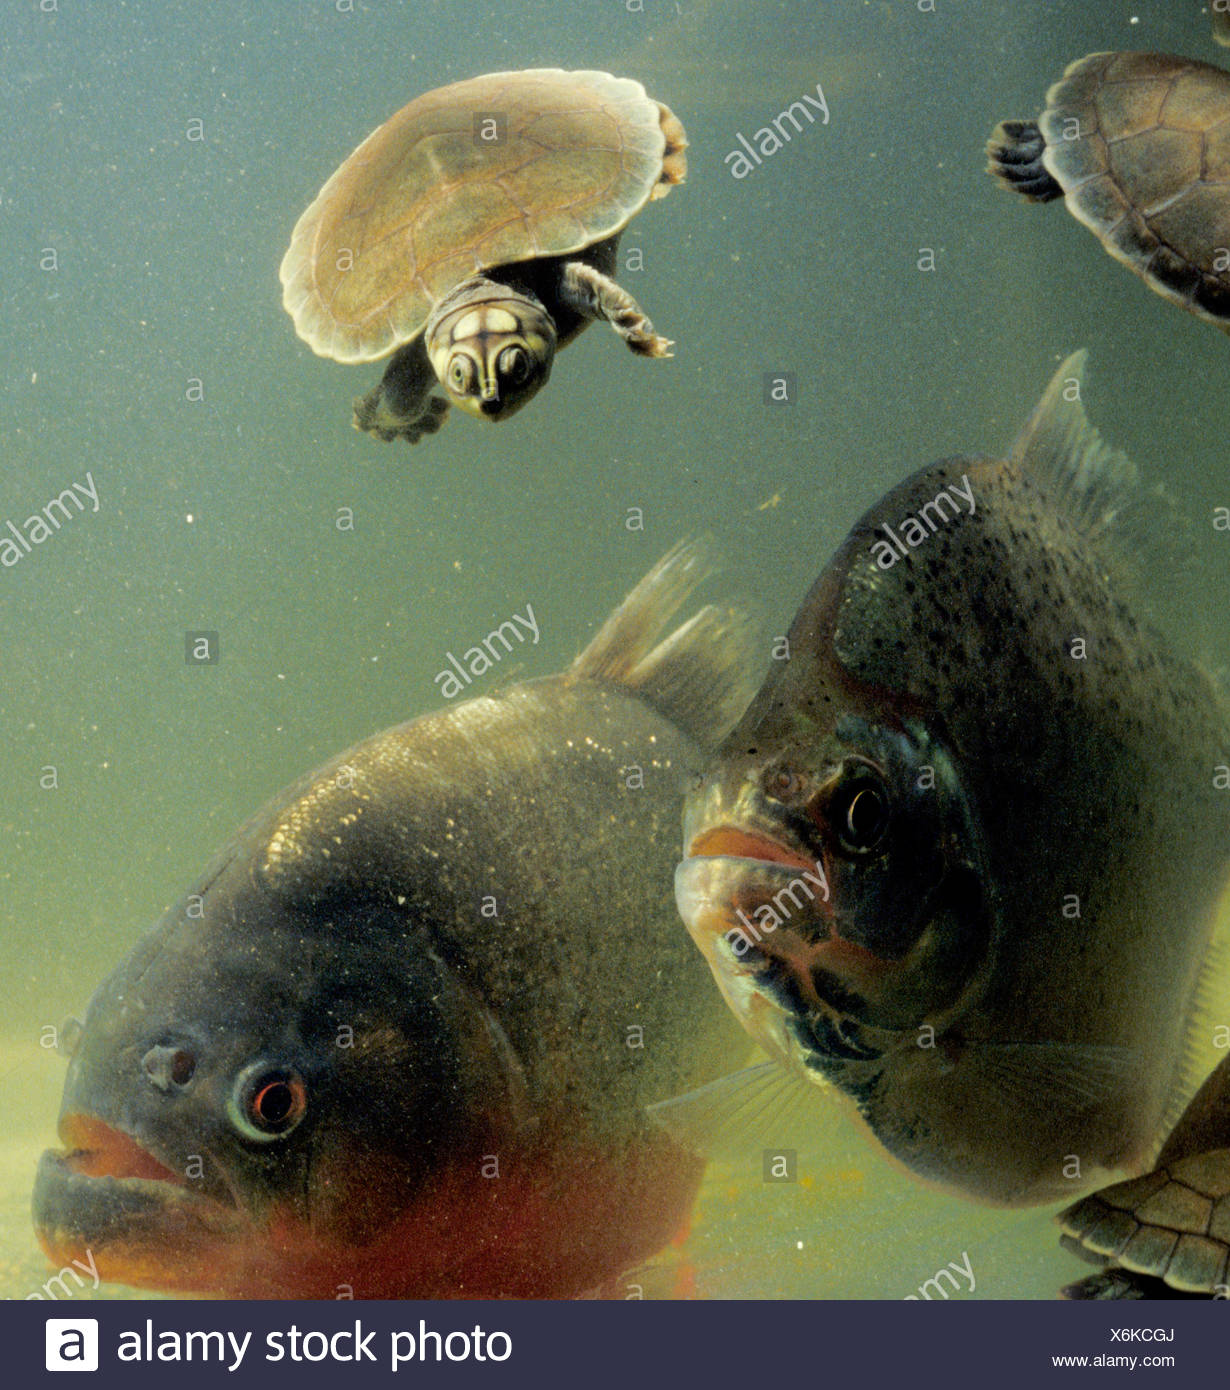 Carnivore Piranhas Attacking Baby River Turtles Amazon River Basin Brazil Stock Photo Alamy